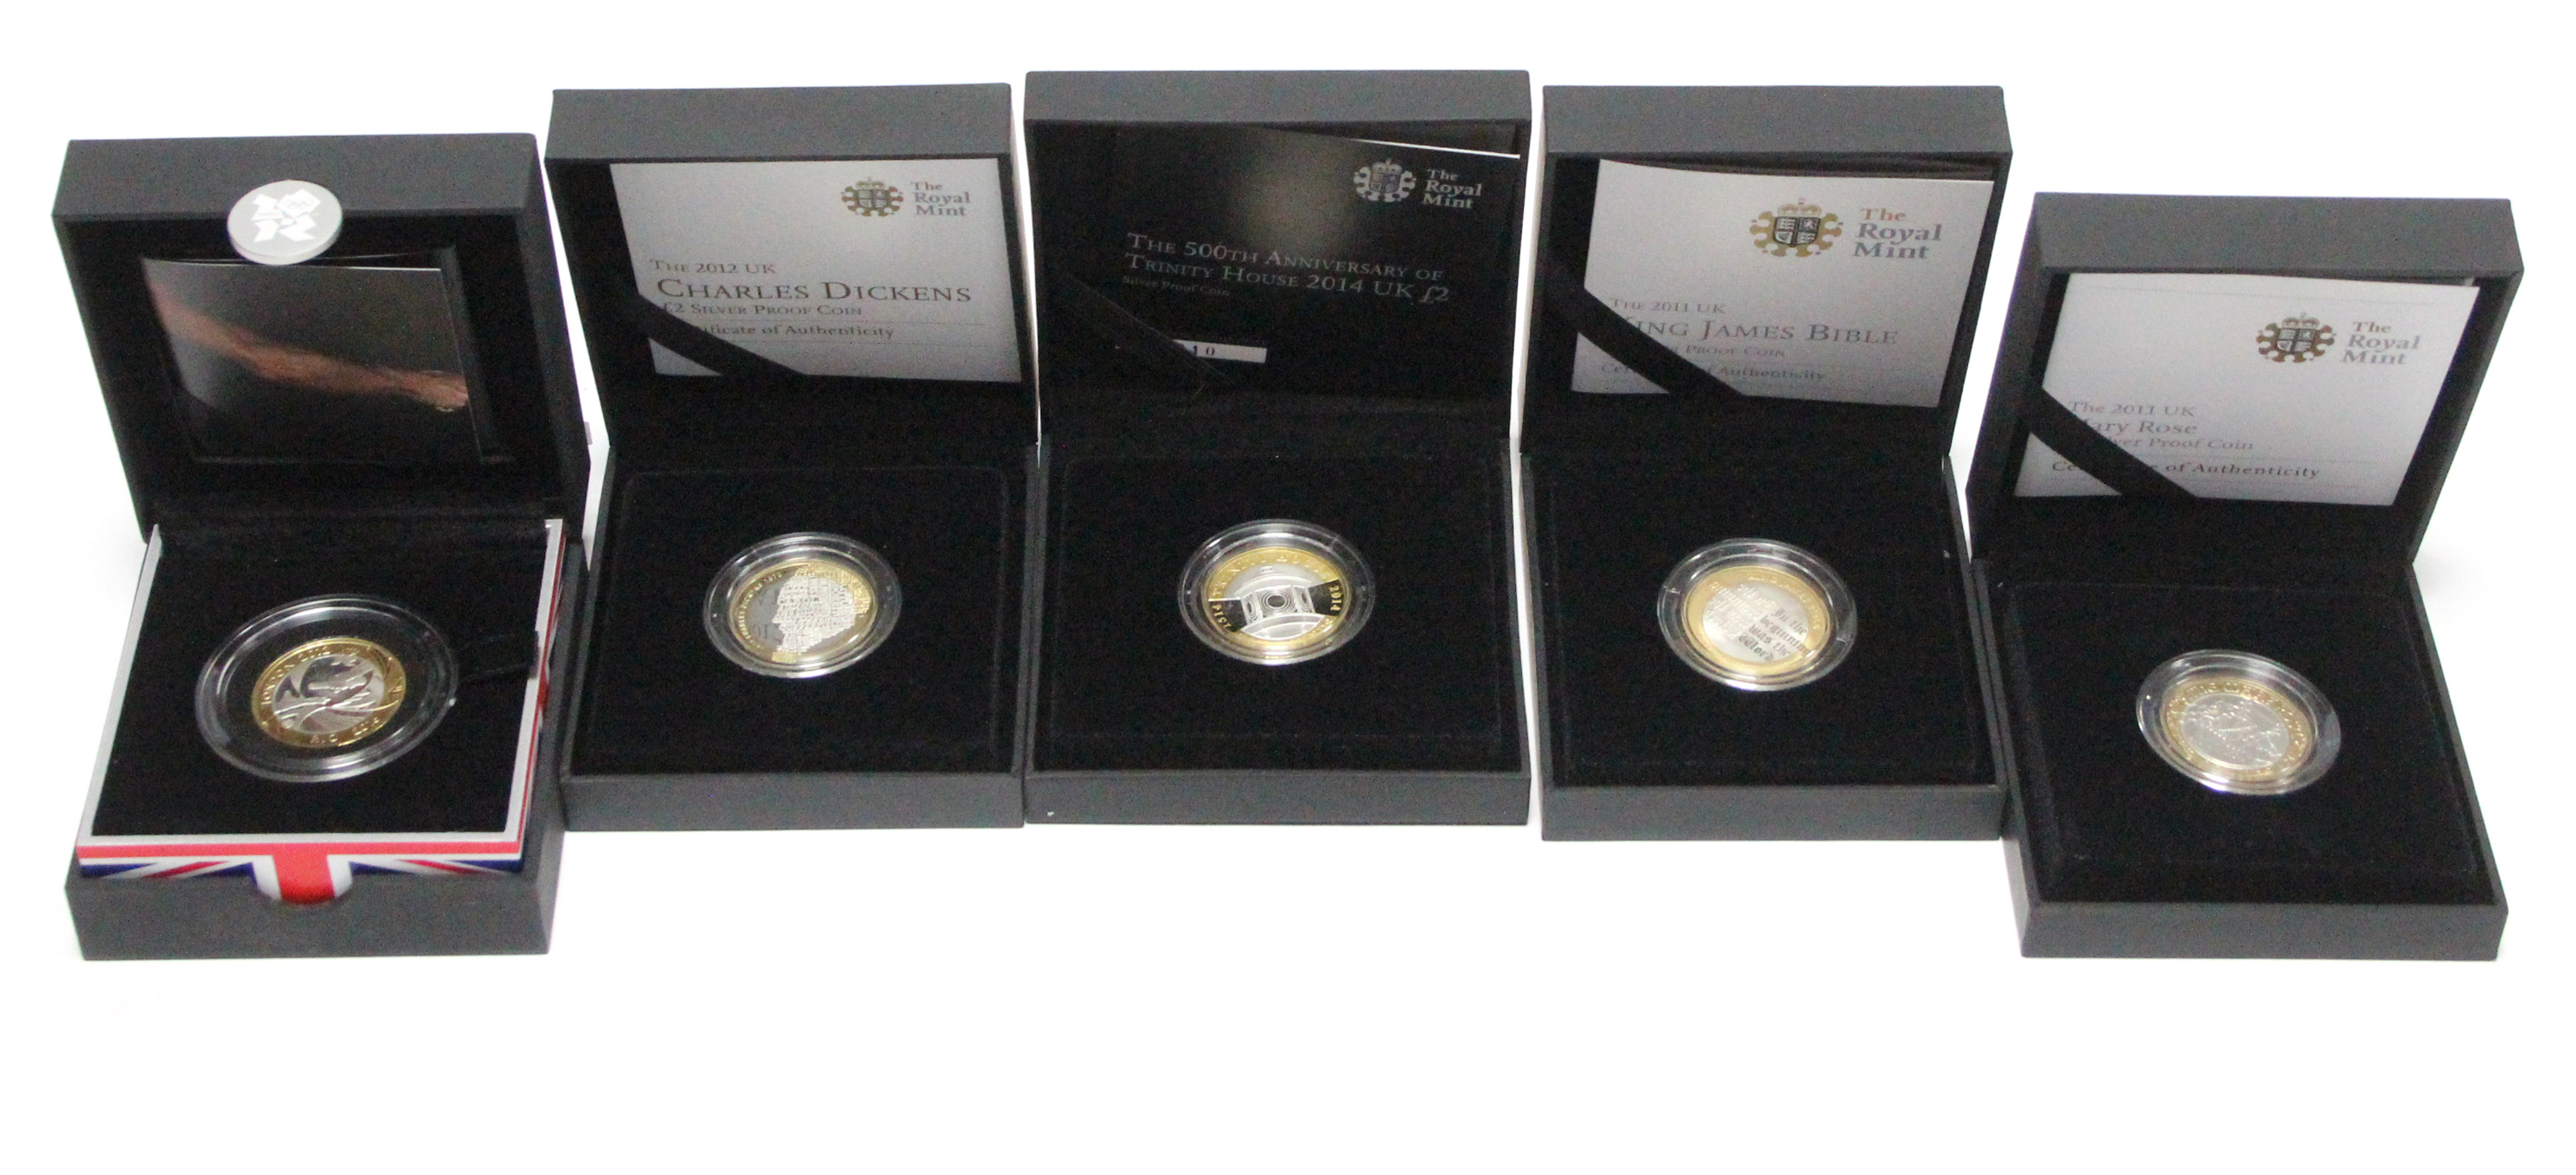 Five Royal Mint proof bi-colour commemorative £2 coins; 2001 (King James Bible, & Mary Rose);